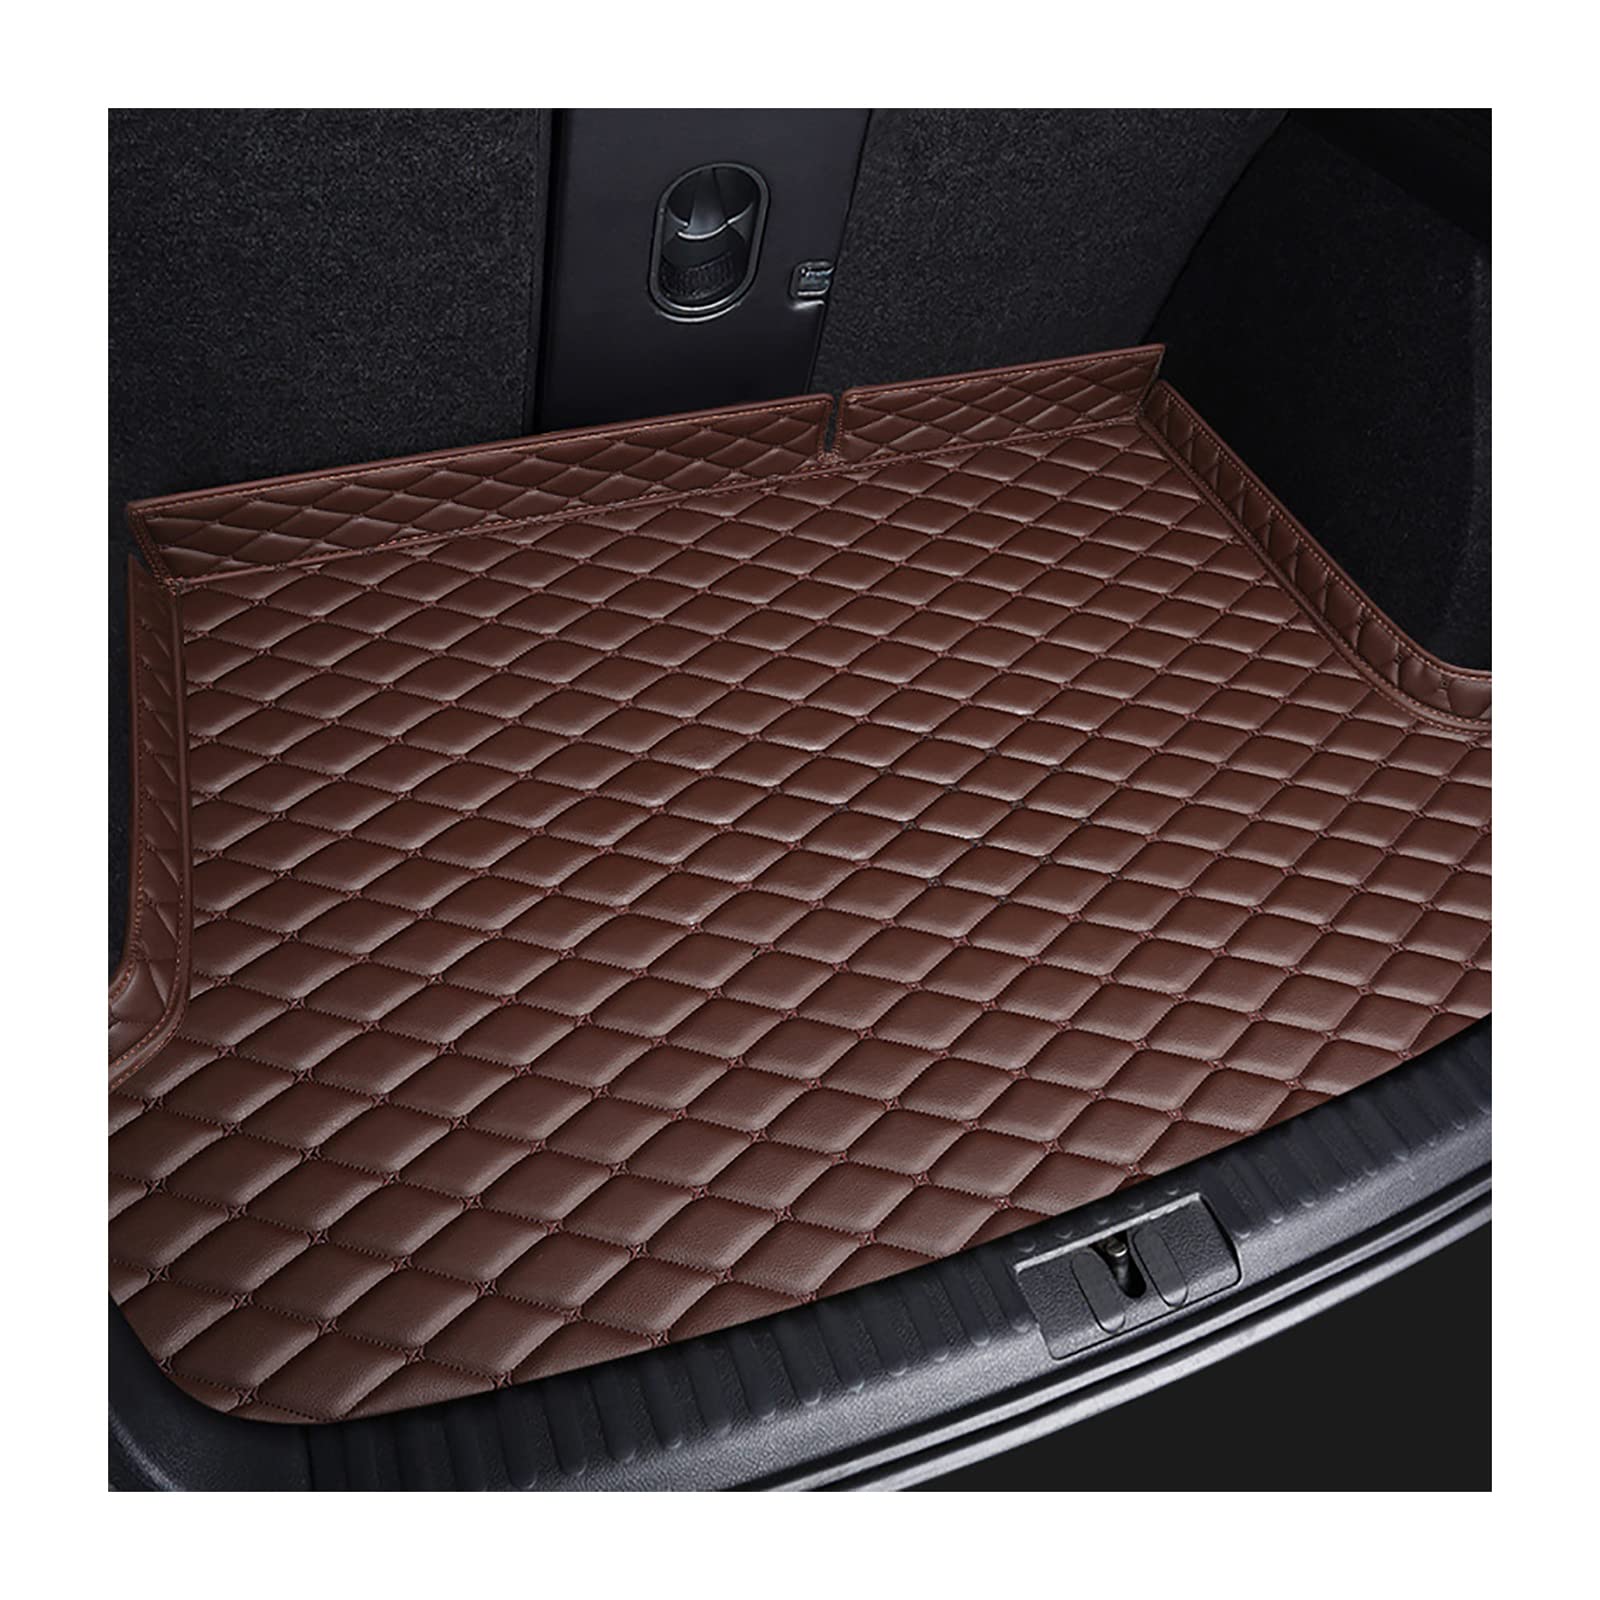 Car Boot Protection Mat mit Erhöhtem Rand, Kompatibel mit BMW 2 Series 2 door 2018+, Boot Protector Boot Mat Accessories,5-Coffee von YPGHBHD